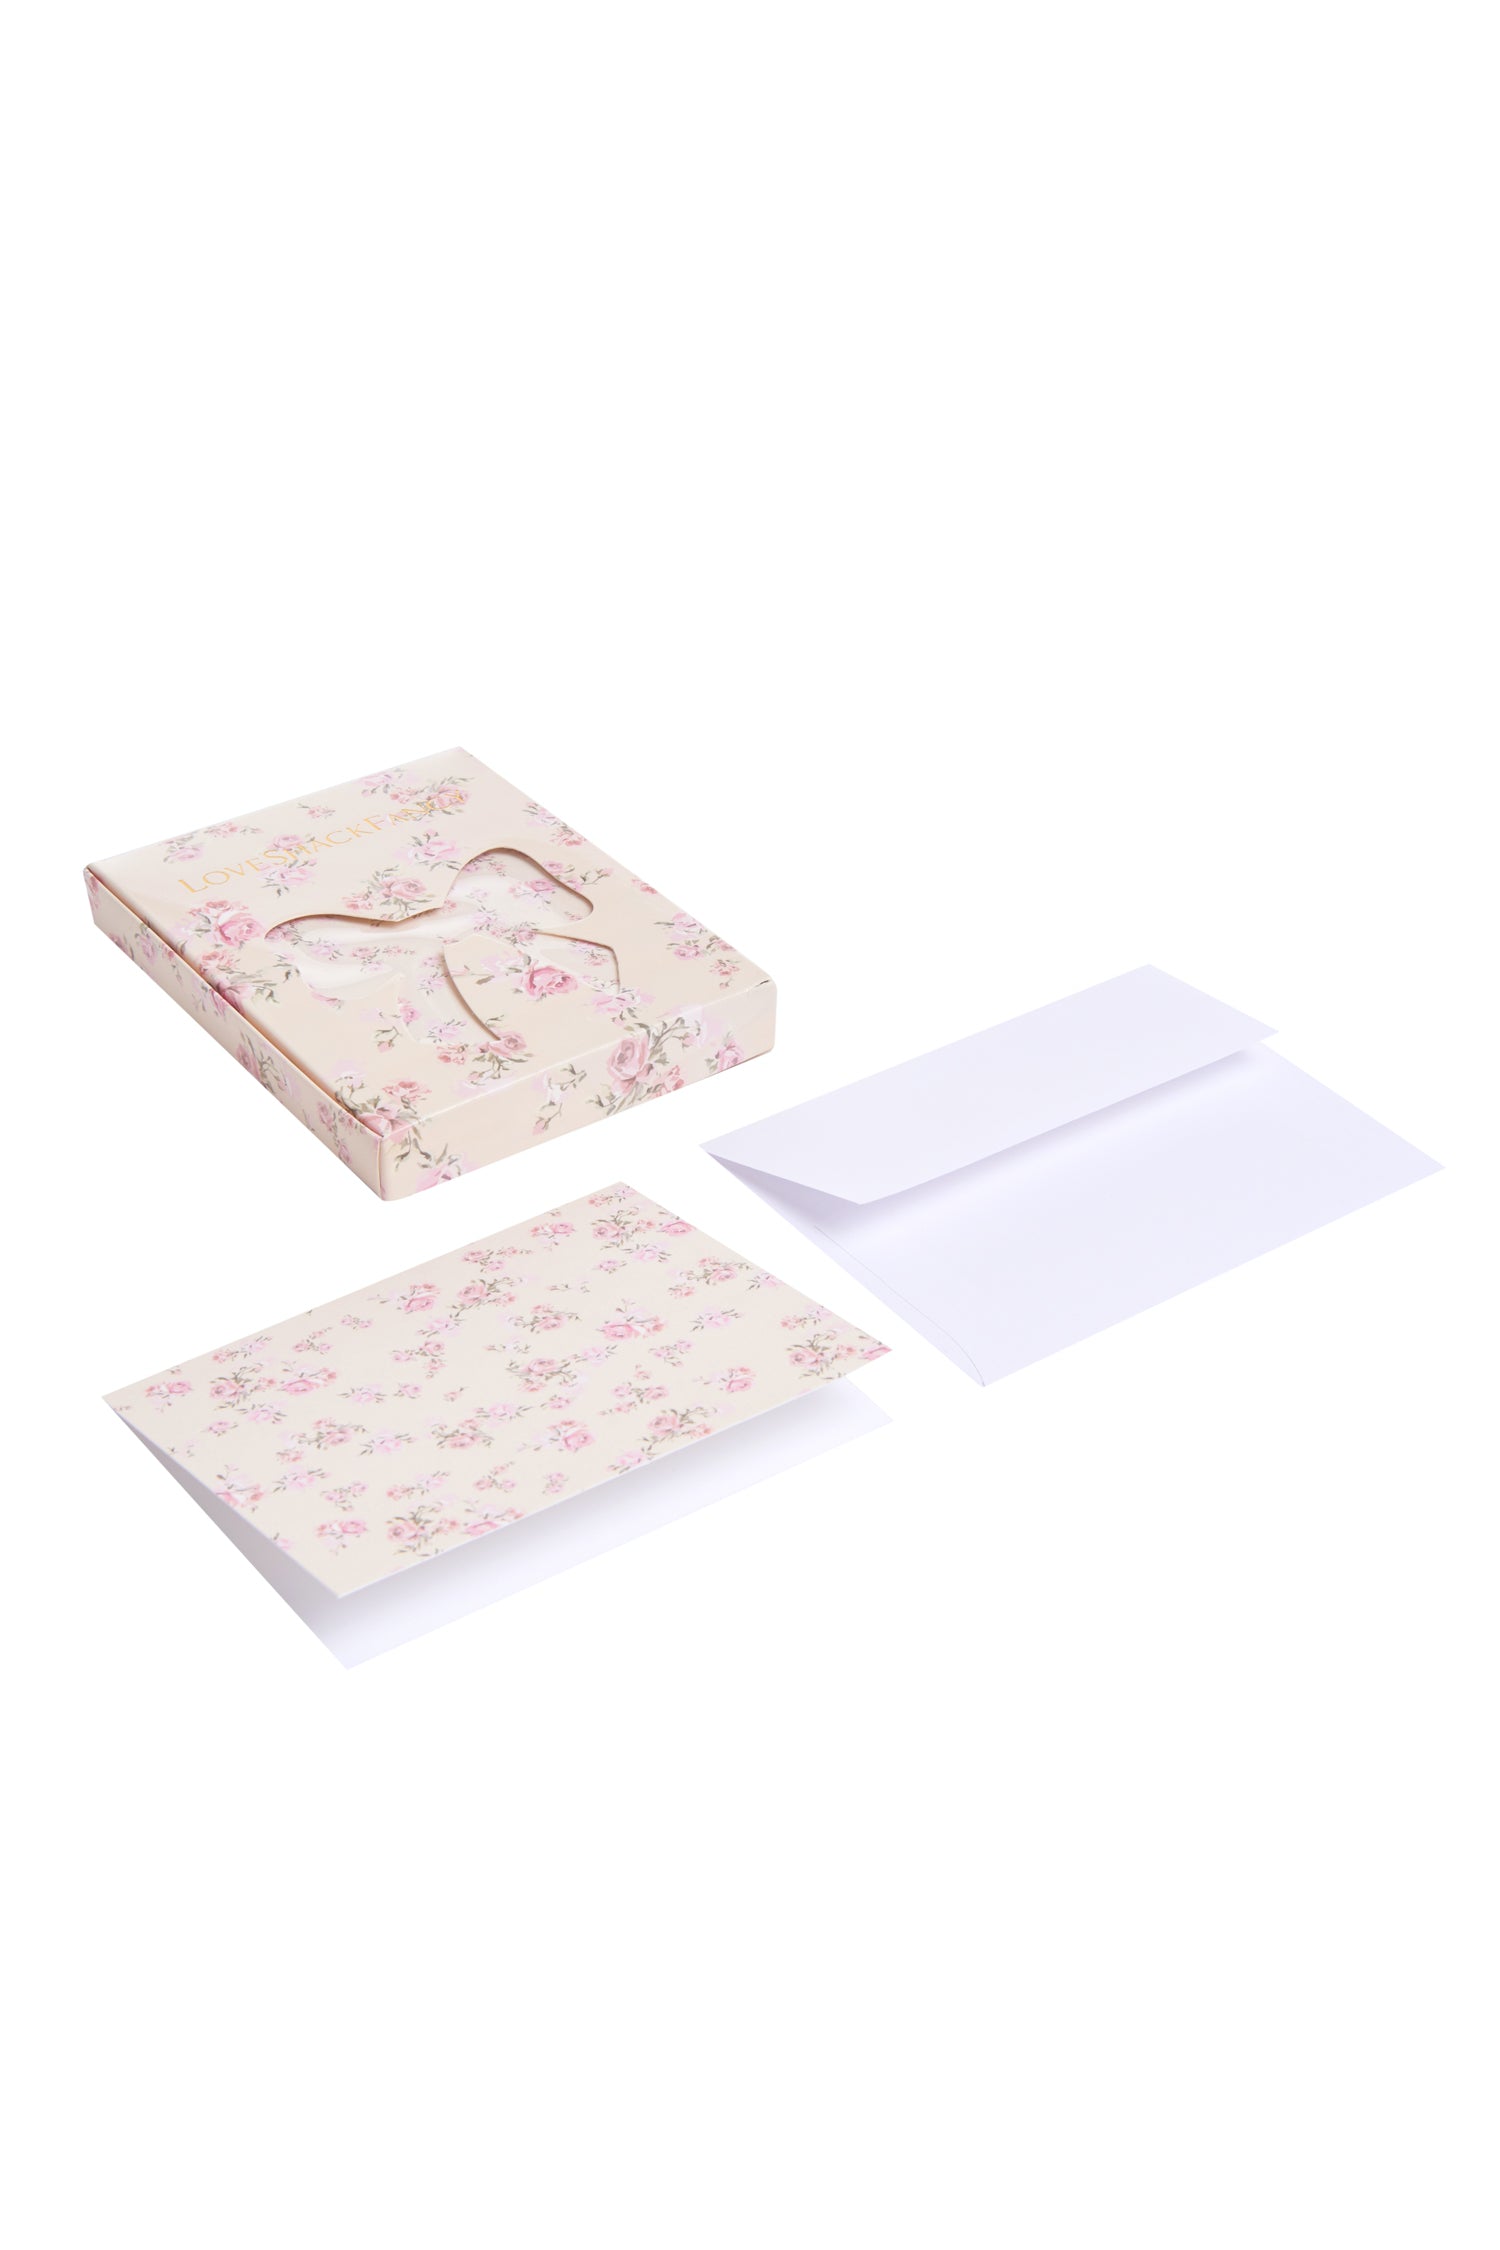 LSF Card & Envelope Set